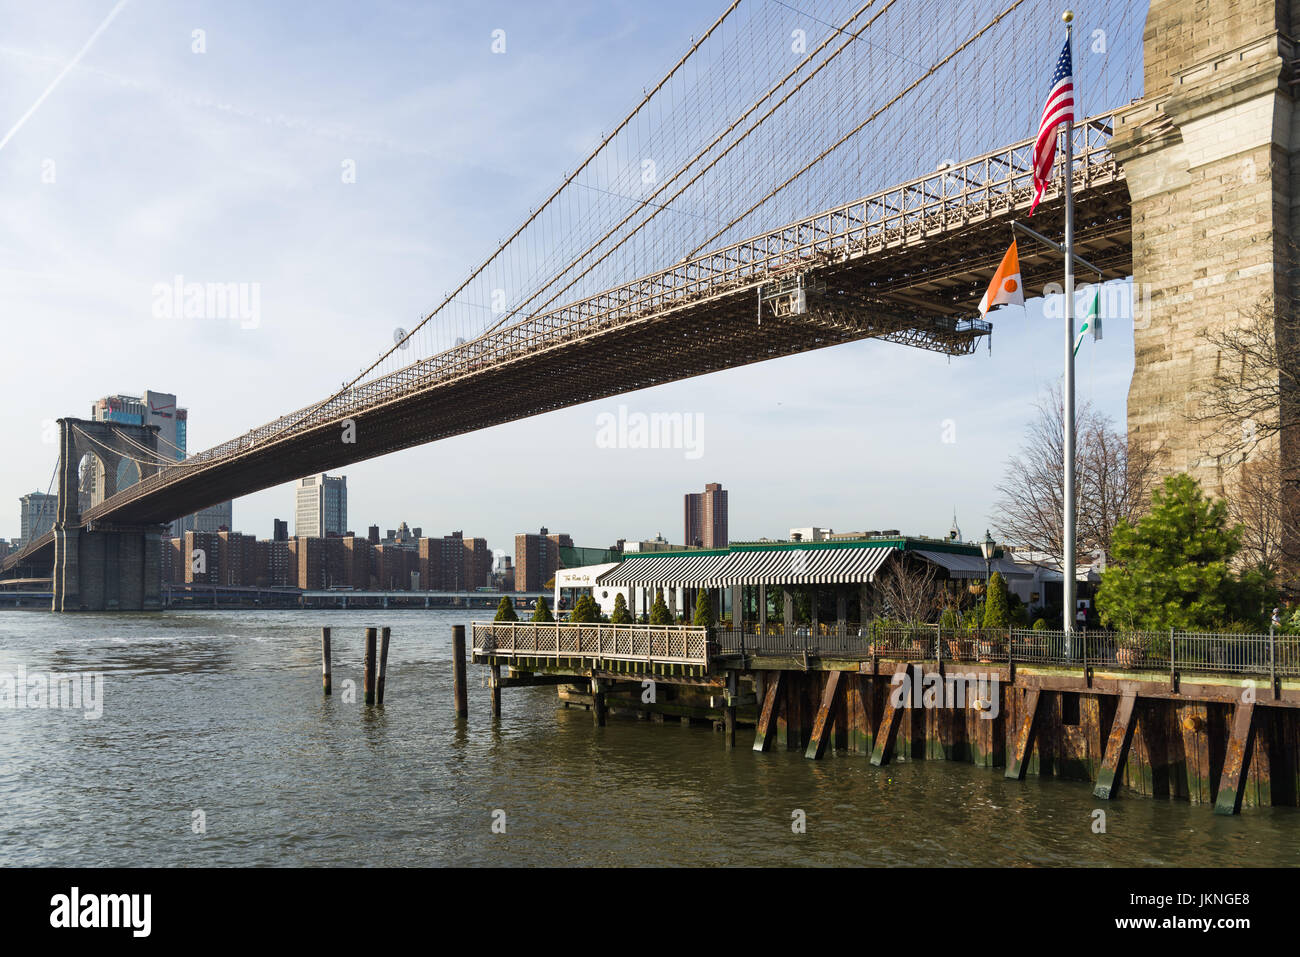 Brooklyn Bridge With The River Cafe Restaurant Underneath, New York, USA Stock Photo